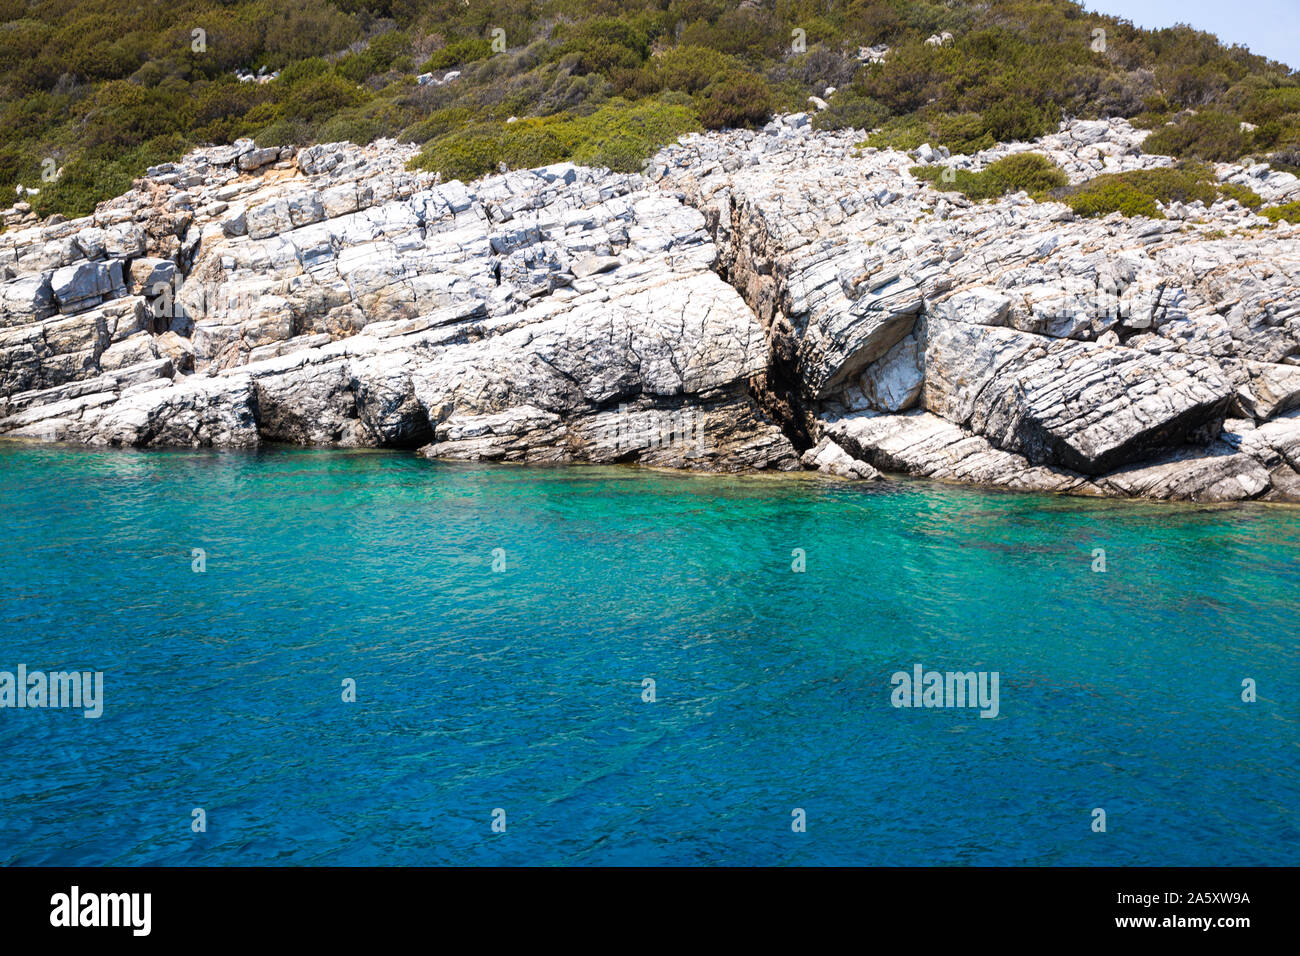 Blue turquoise water of mediterranean sea (aegean sea). Turkey, Bodrum region. Stock Photo